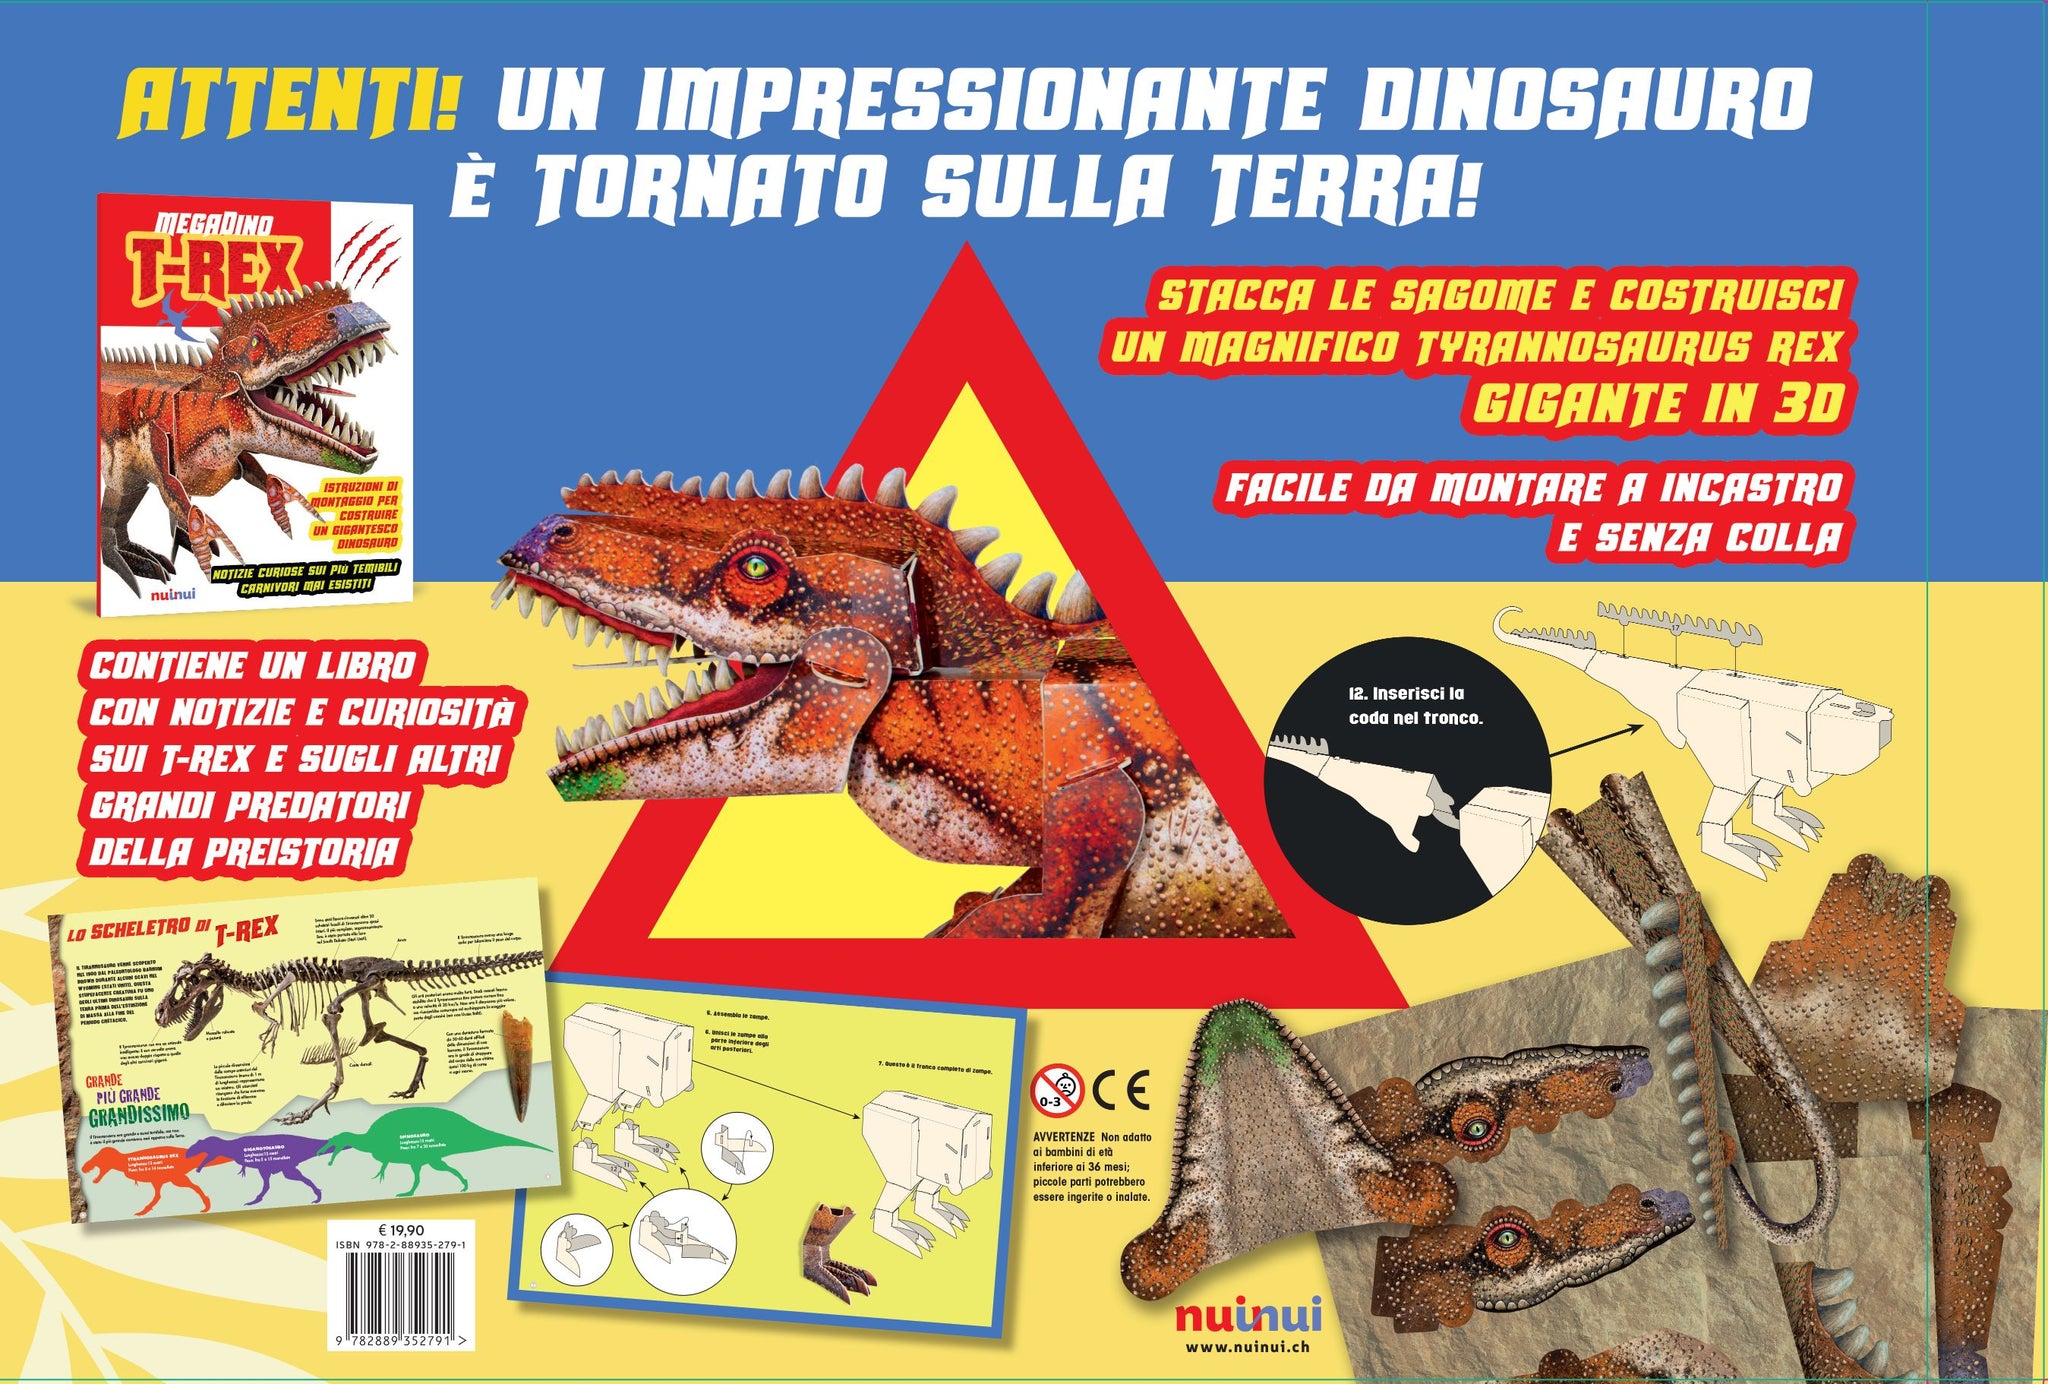 MegaDino T-Rex - costruisci un dinosauro gigante in 3D